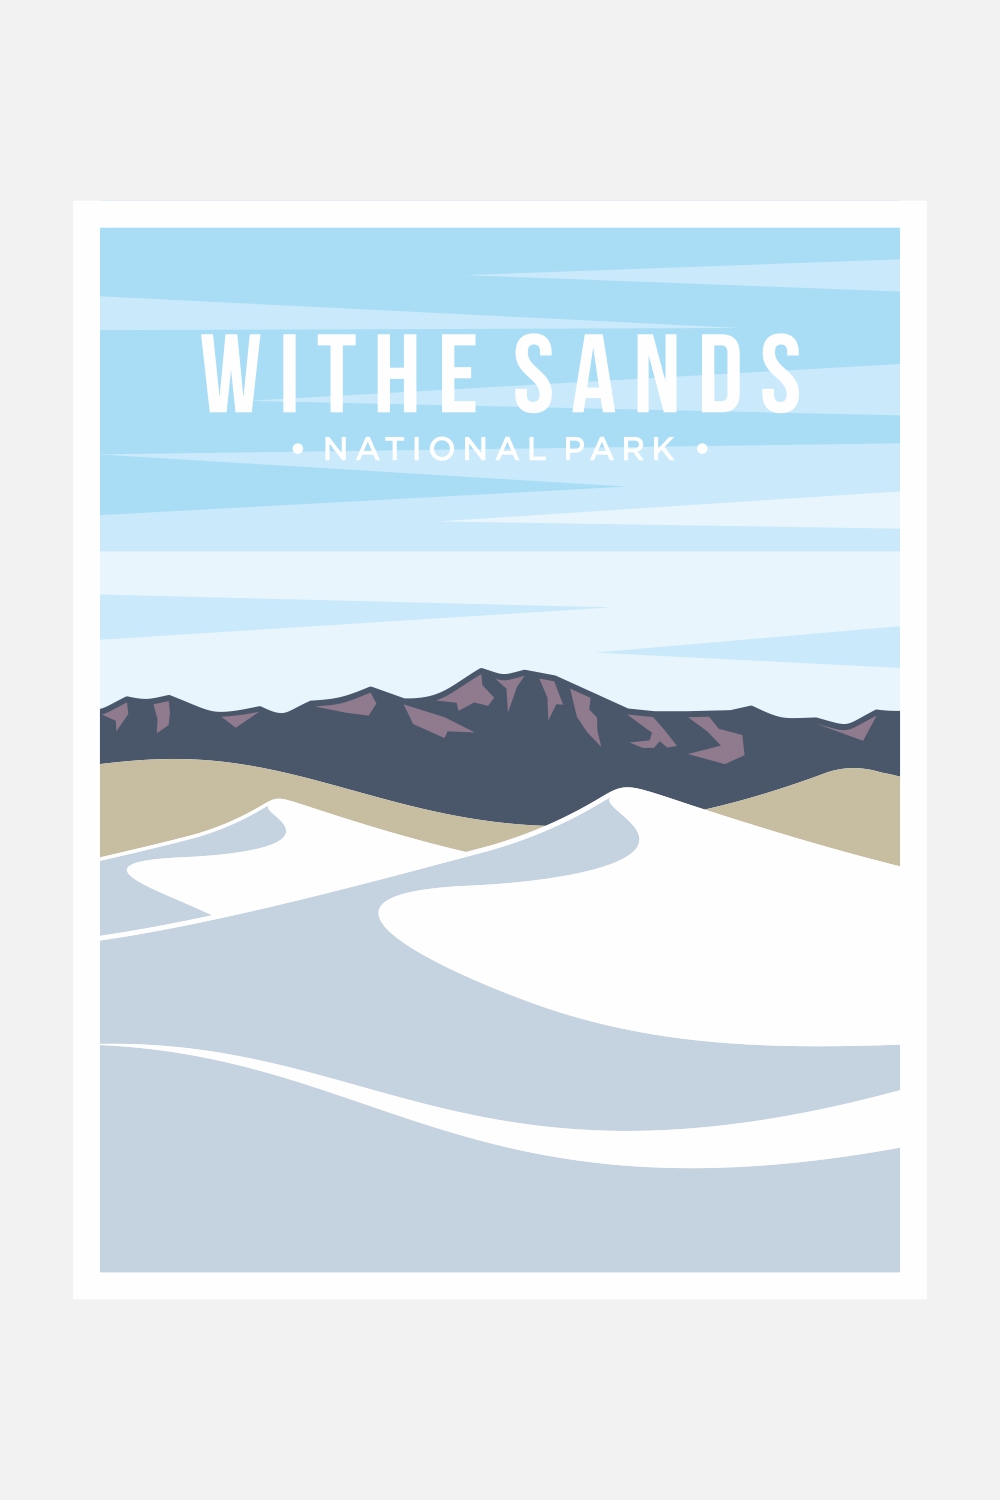 White Sand National Park poster vector illustration design – Only $8 pinterest preview image.